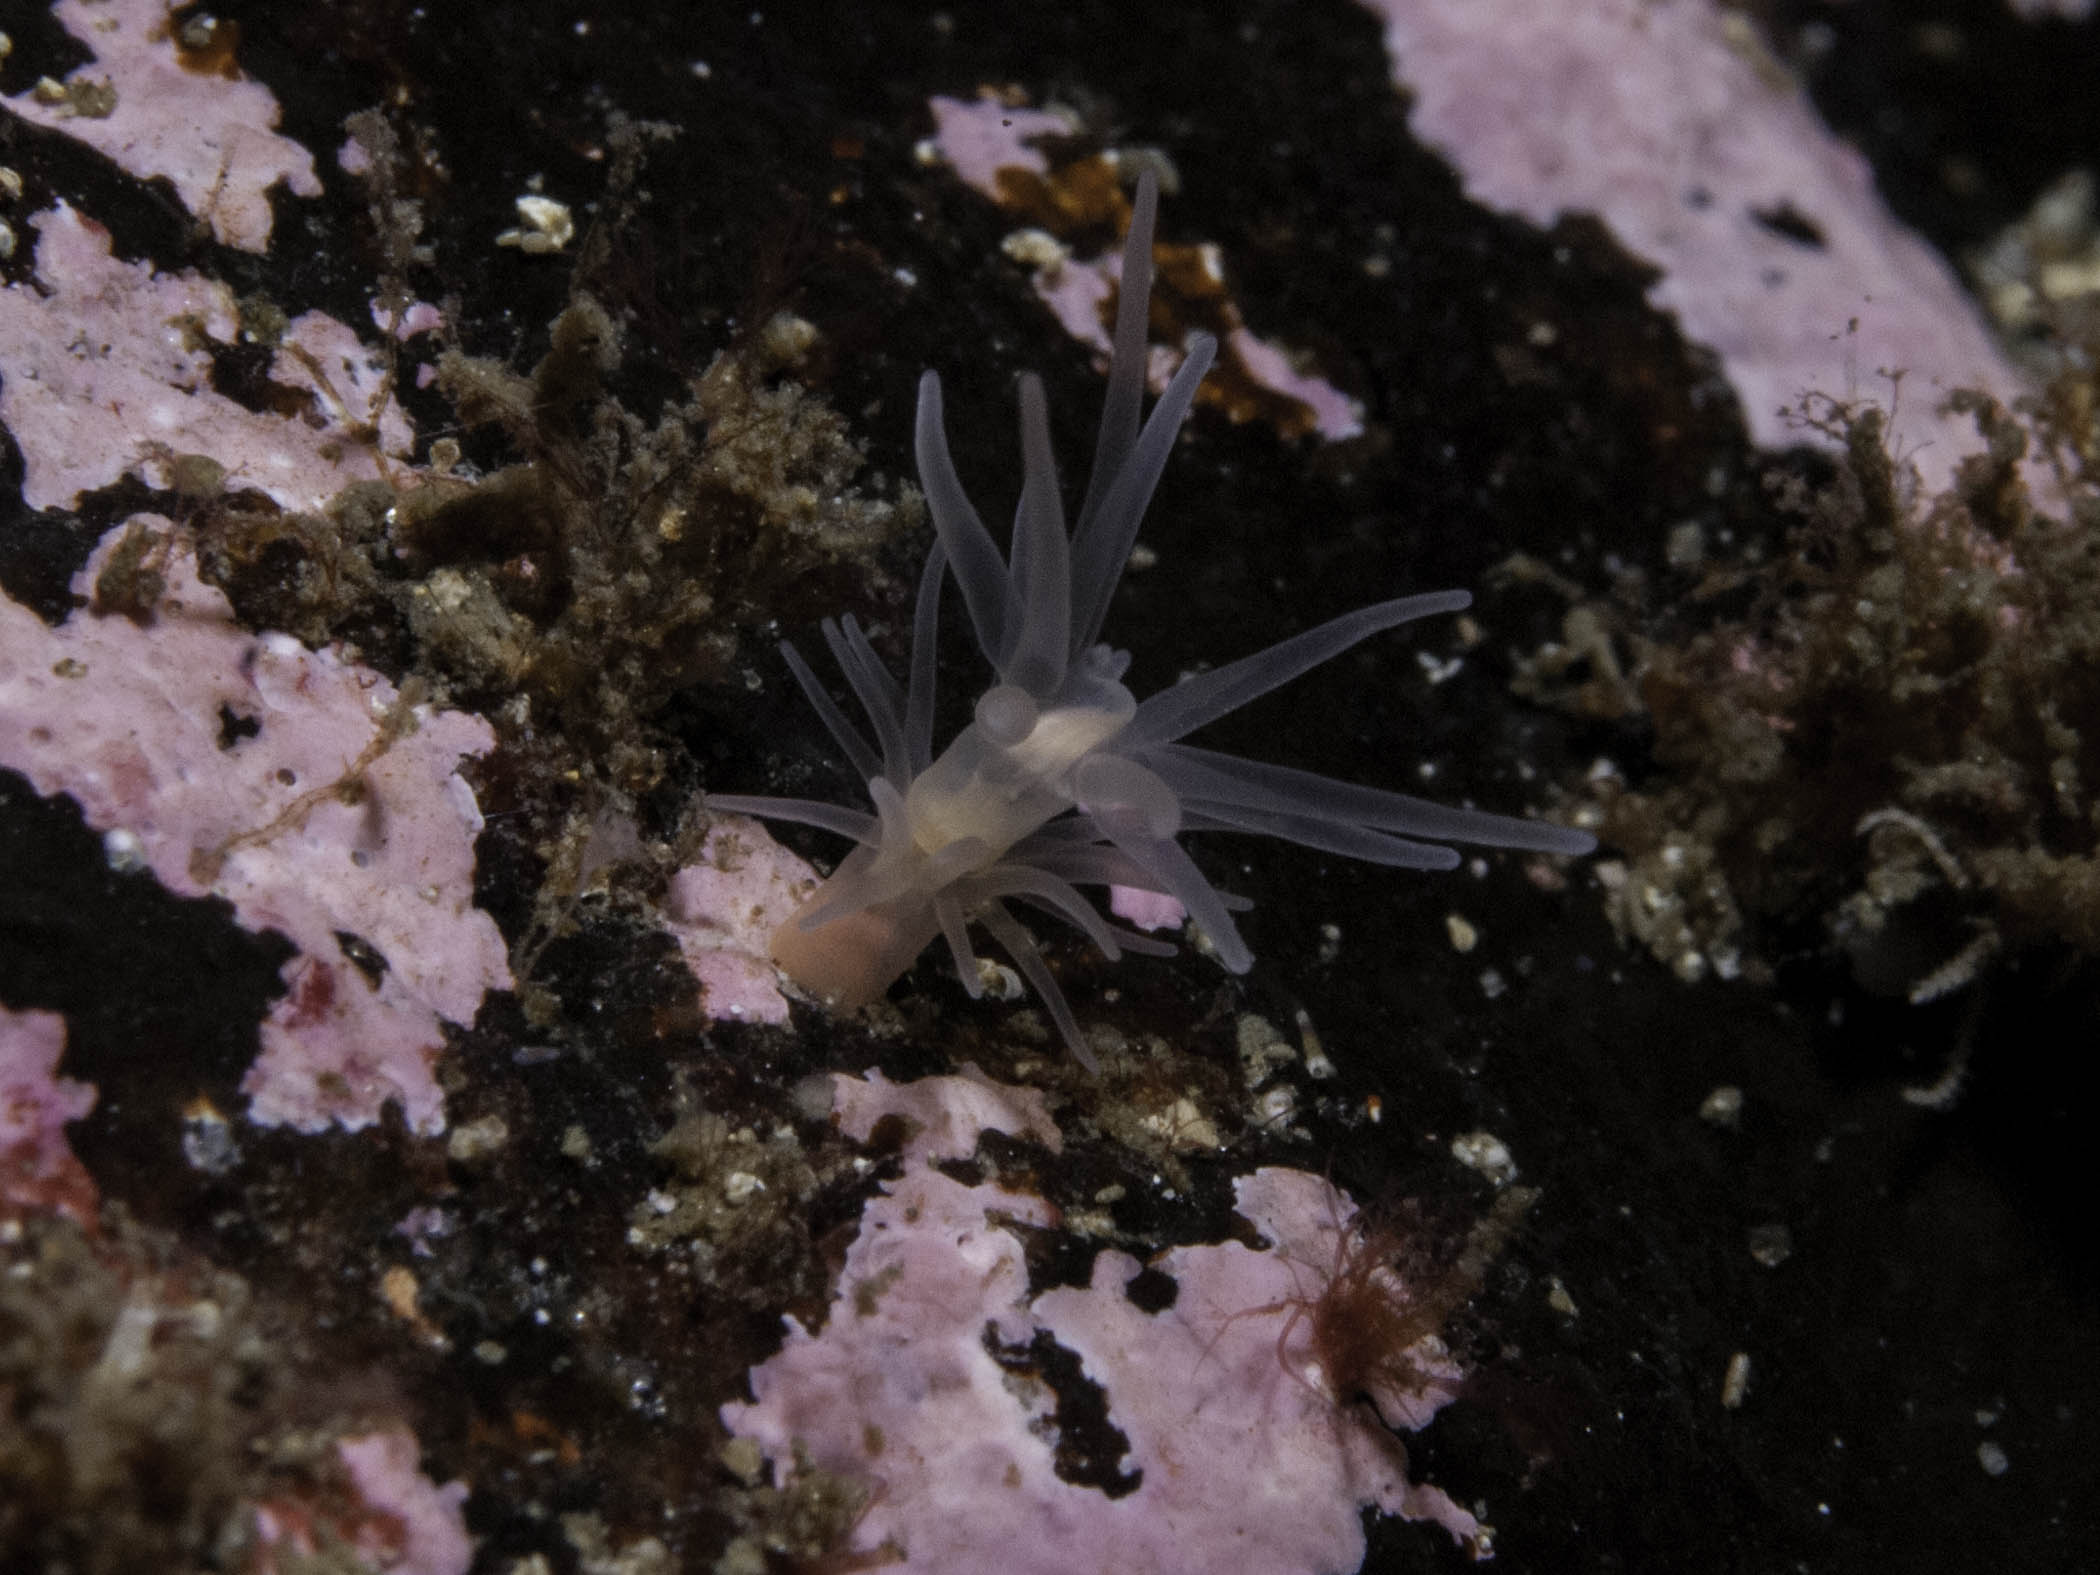 image: Gonactinia prolifera. Showing reproduction by transverse division, Gulen, Norway, 2013.